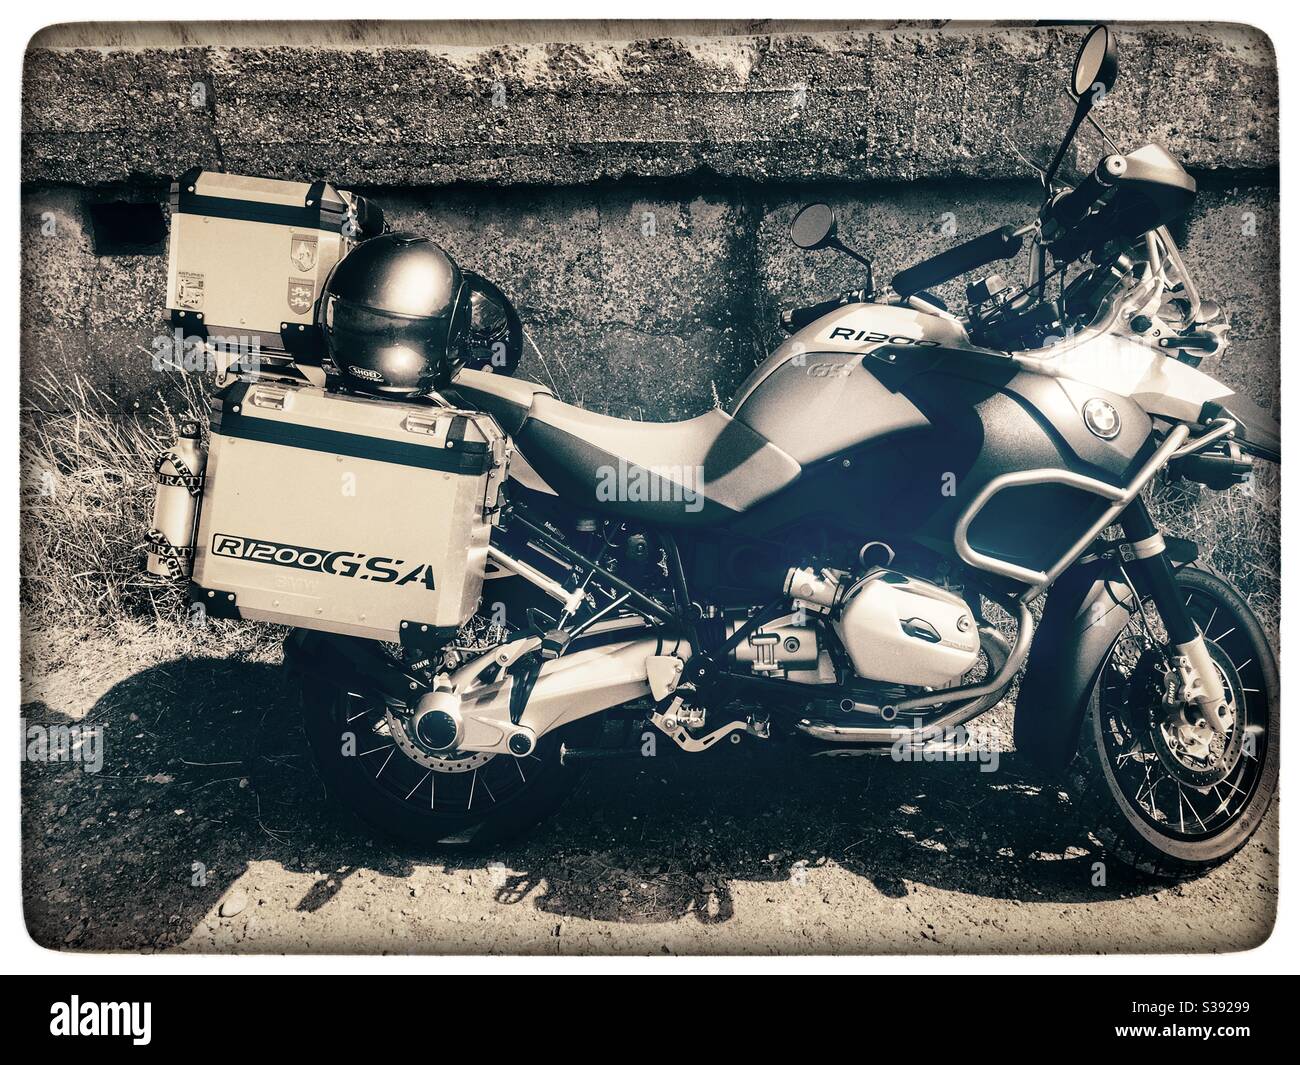 BMW 1200 GSA motorcycle Stock Photo - Alamy